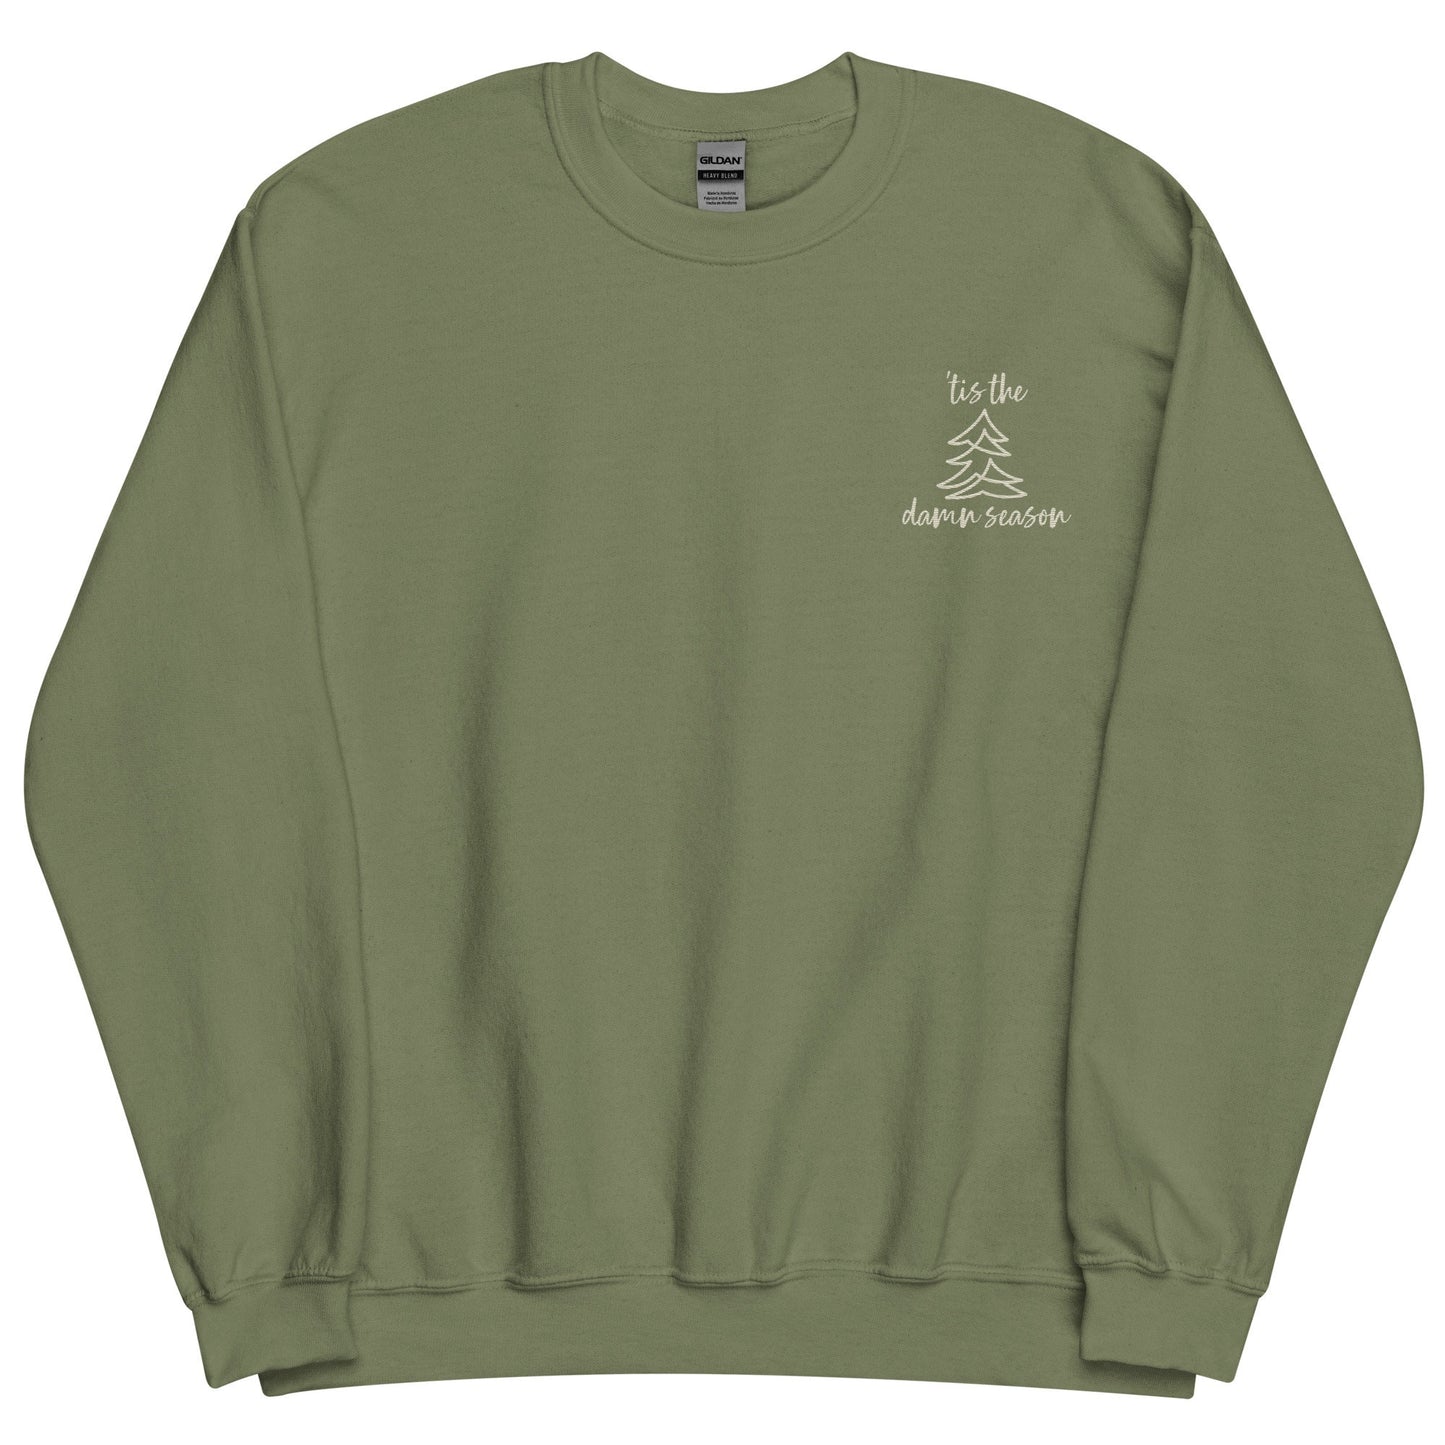 Taylor Swift 'Tis the Damn Season Embroidered Sweatshirt - Cozy Holiday Gift for Music Lovers | Taylor Swift Crewneck Sweatshirt